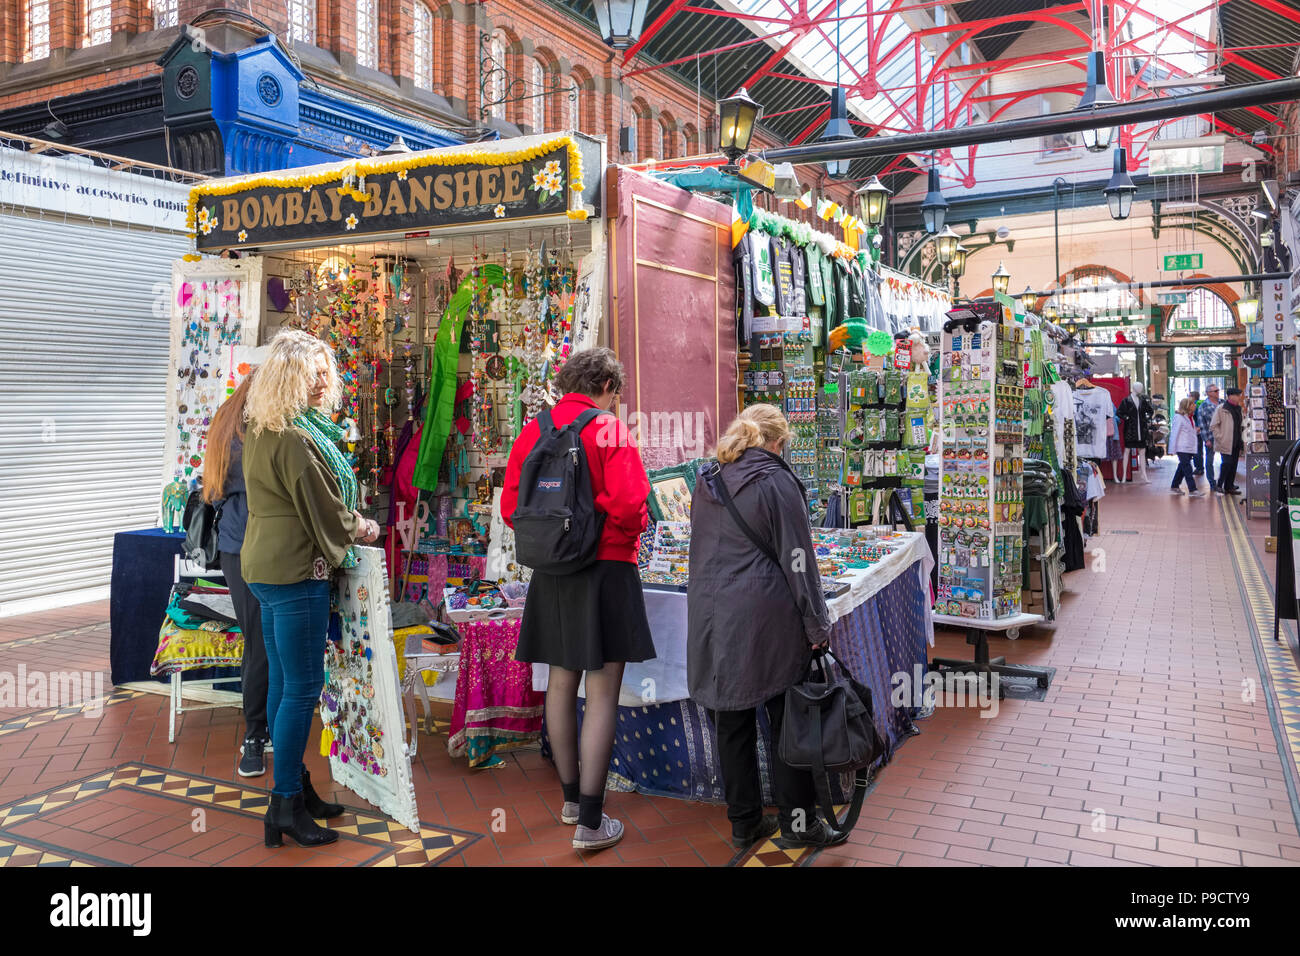 Georges Street Market Arcade, Dublin, Ireland, Europe Stock Photo